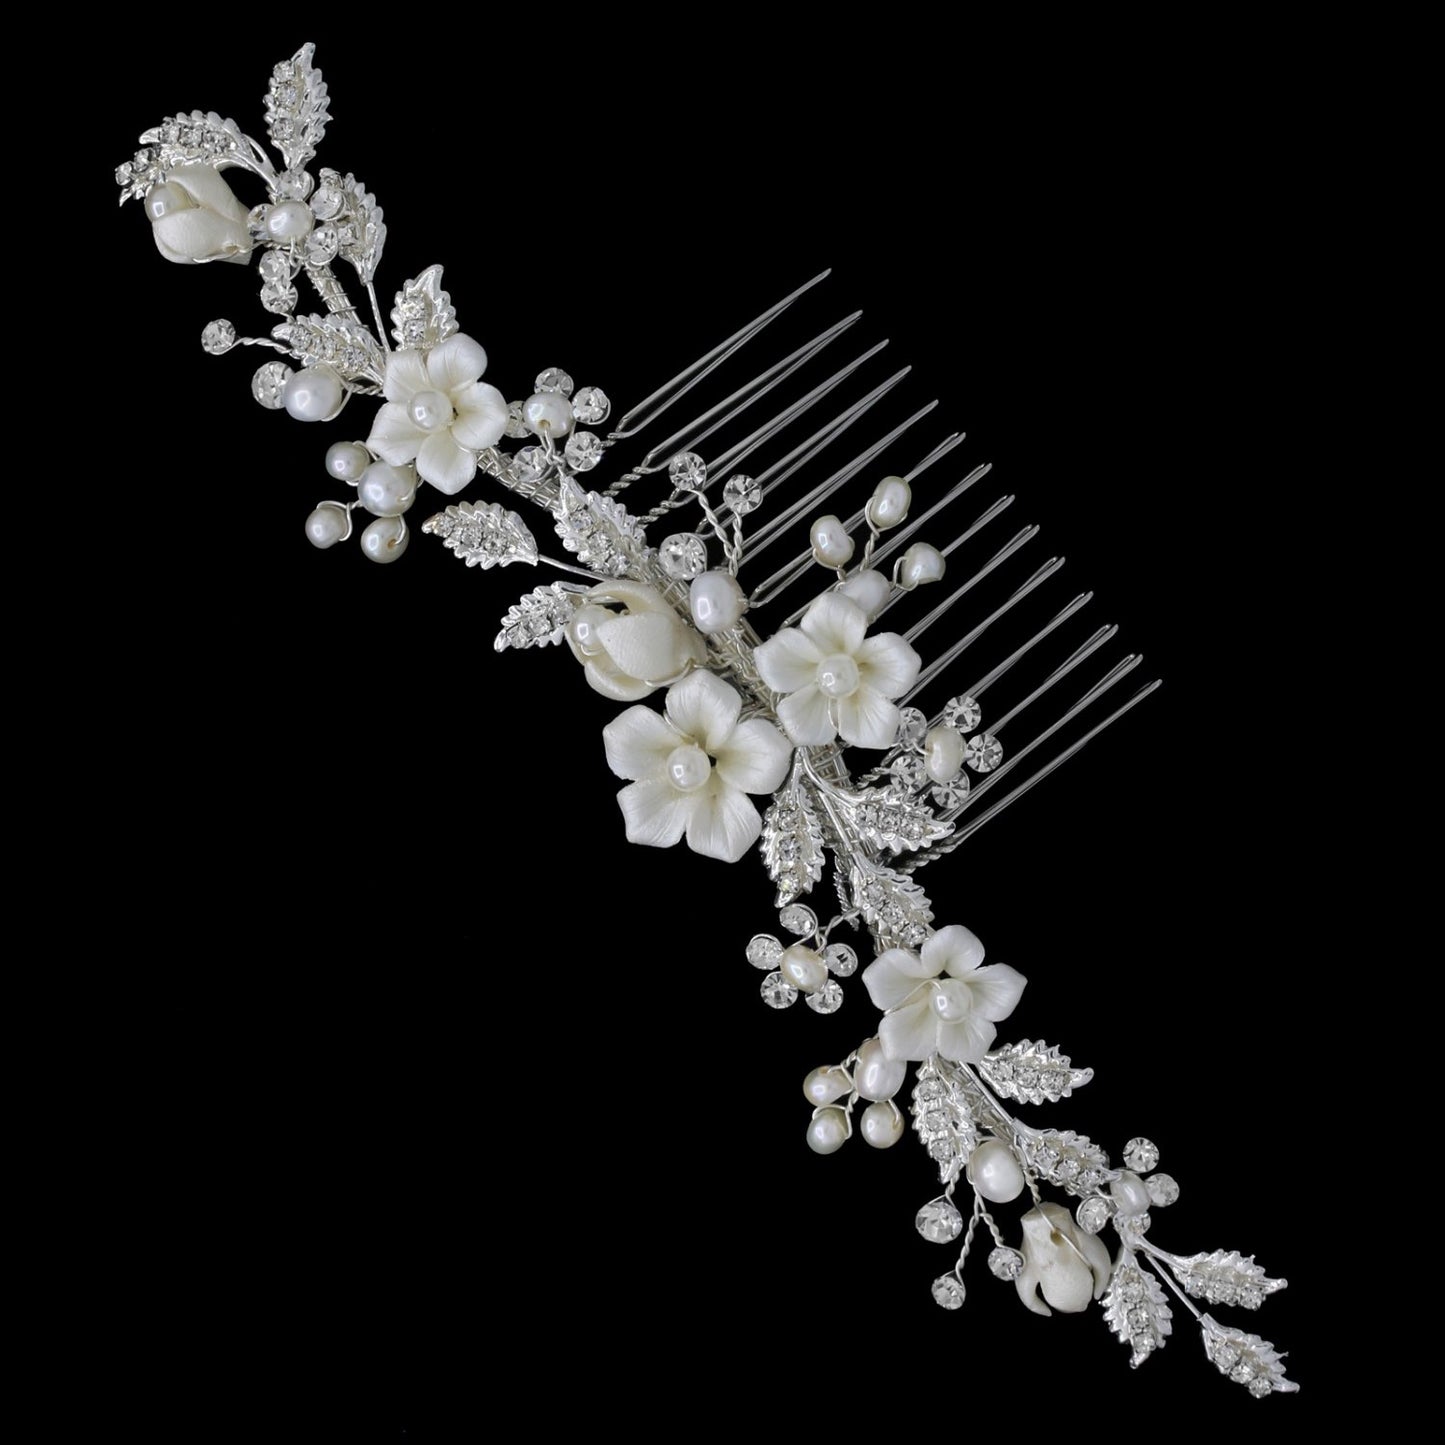 Spring - Crystal flower bridal hair comb